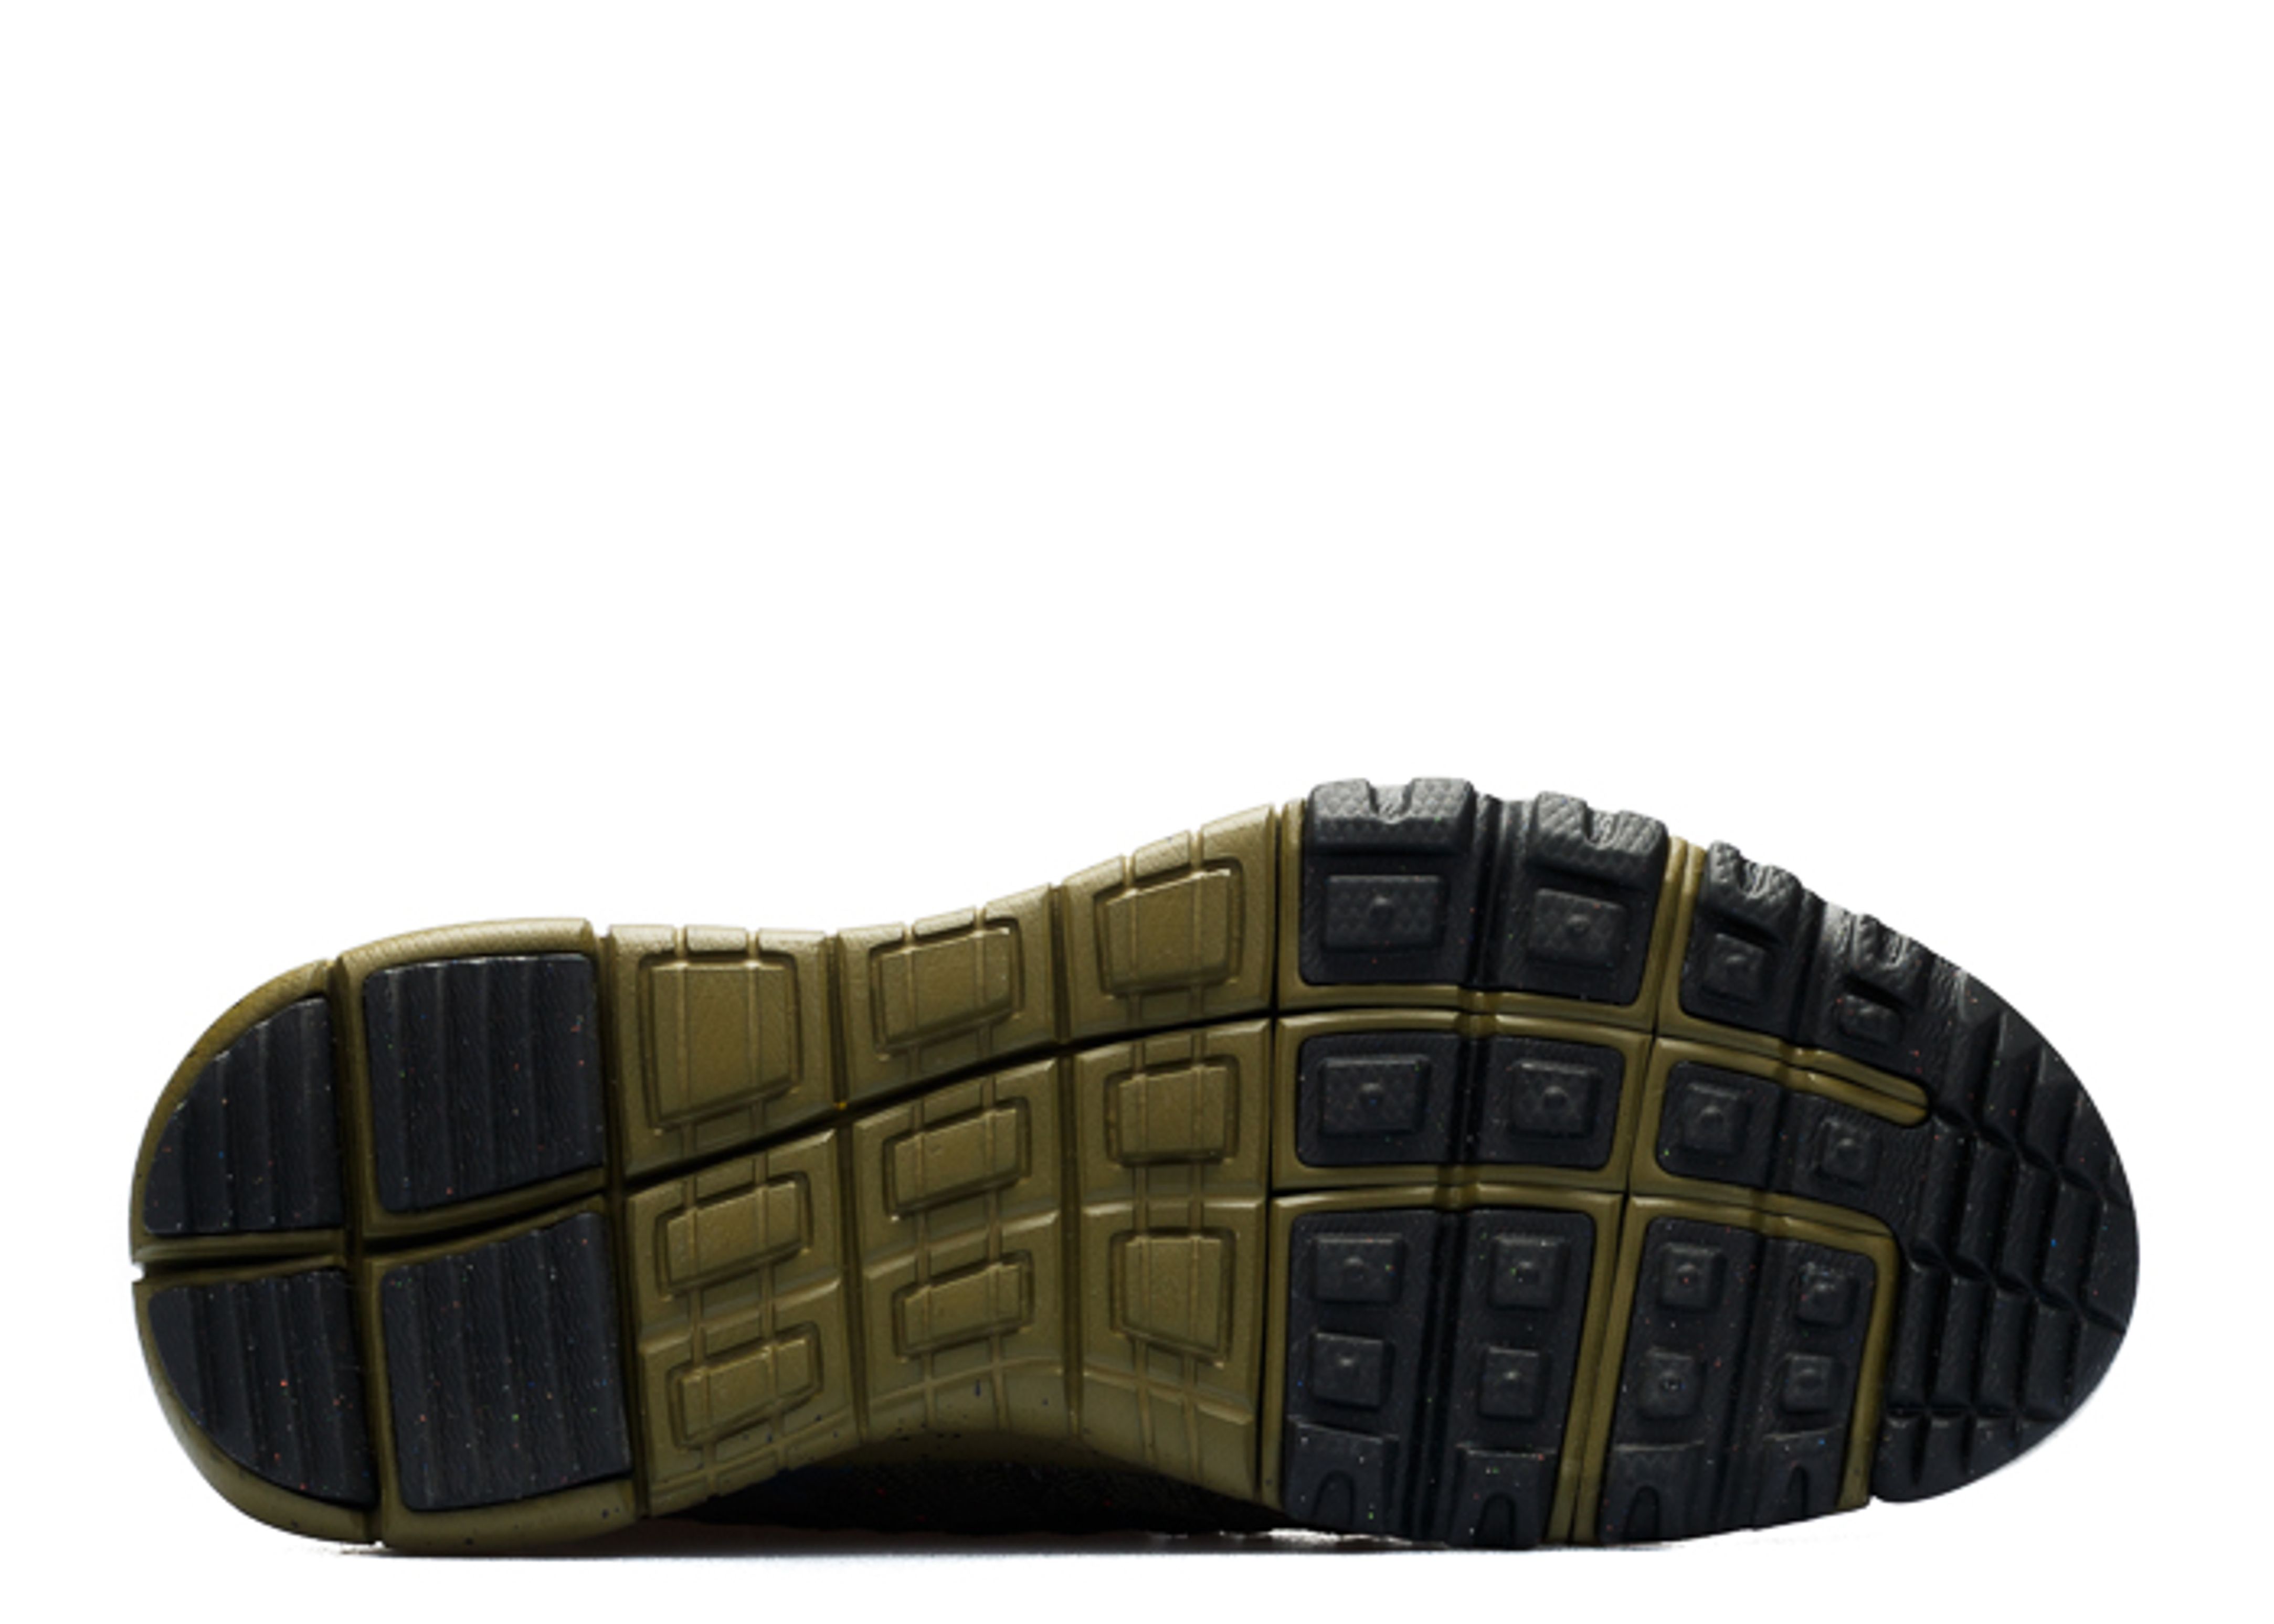 Handel dommer hvad som helst Flyknit Chukka SneakerBoot 'Hologram' - Nike - 805092 300 - sequoia/black |  Flight Club